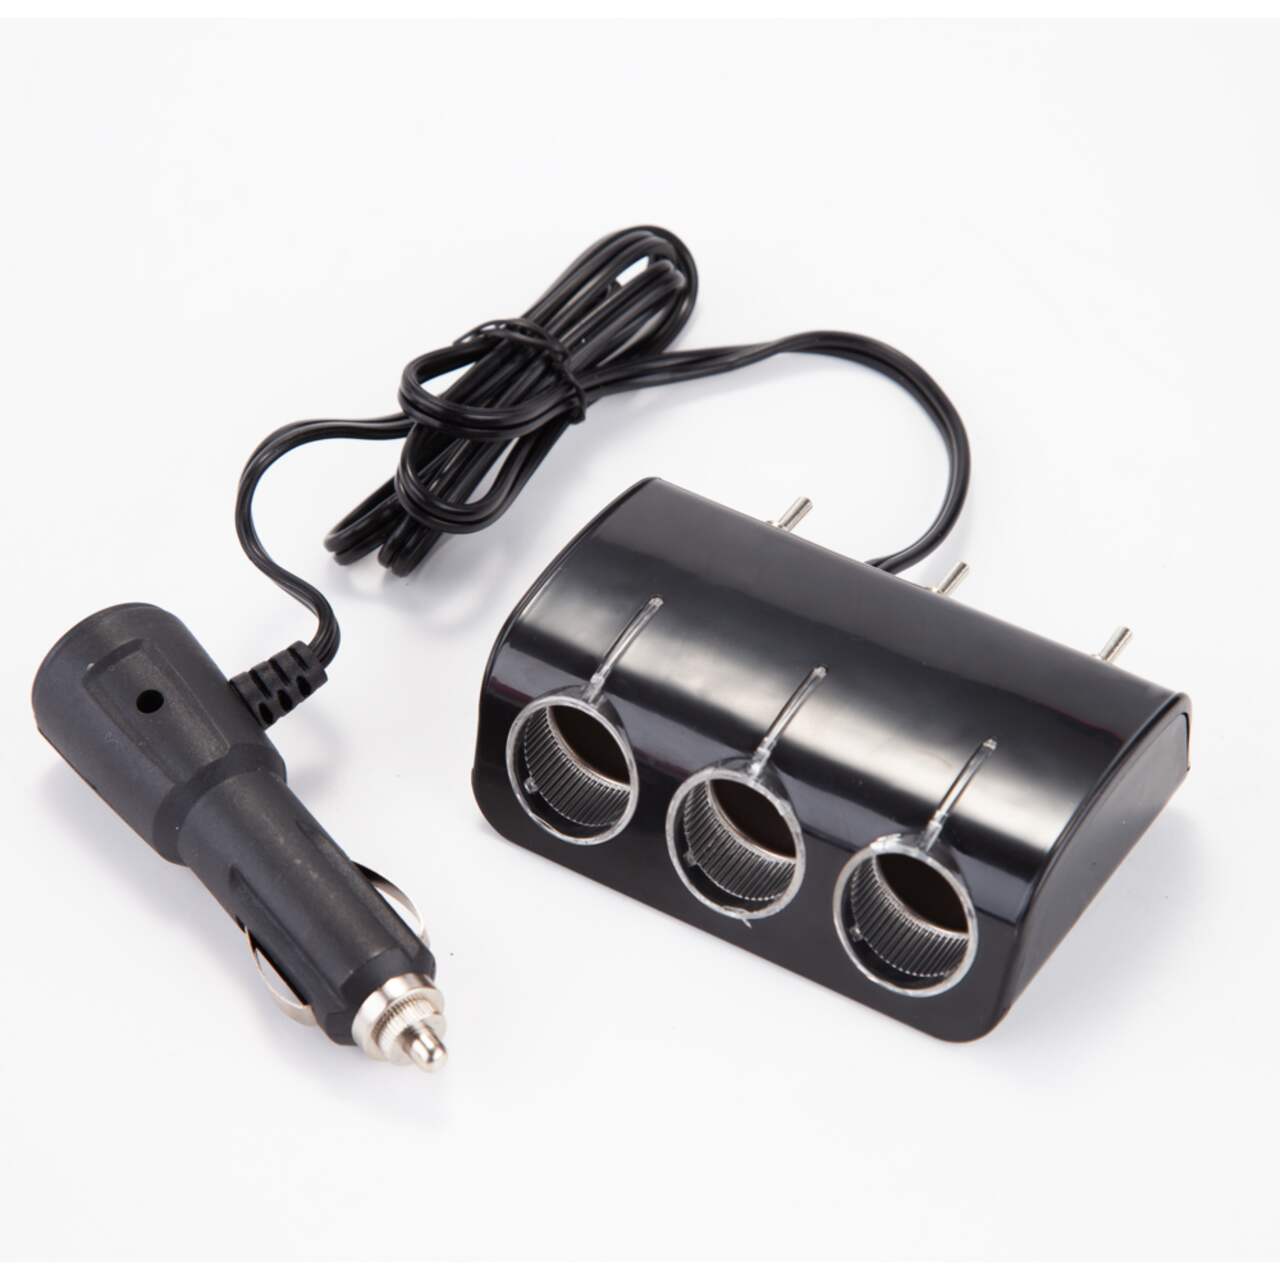 Bluehive 12V 3-Socket with USB Port, LED Power Indicator